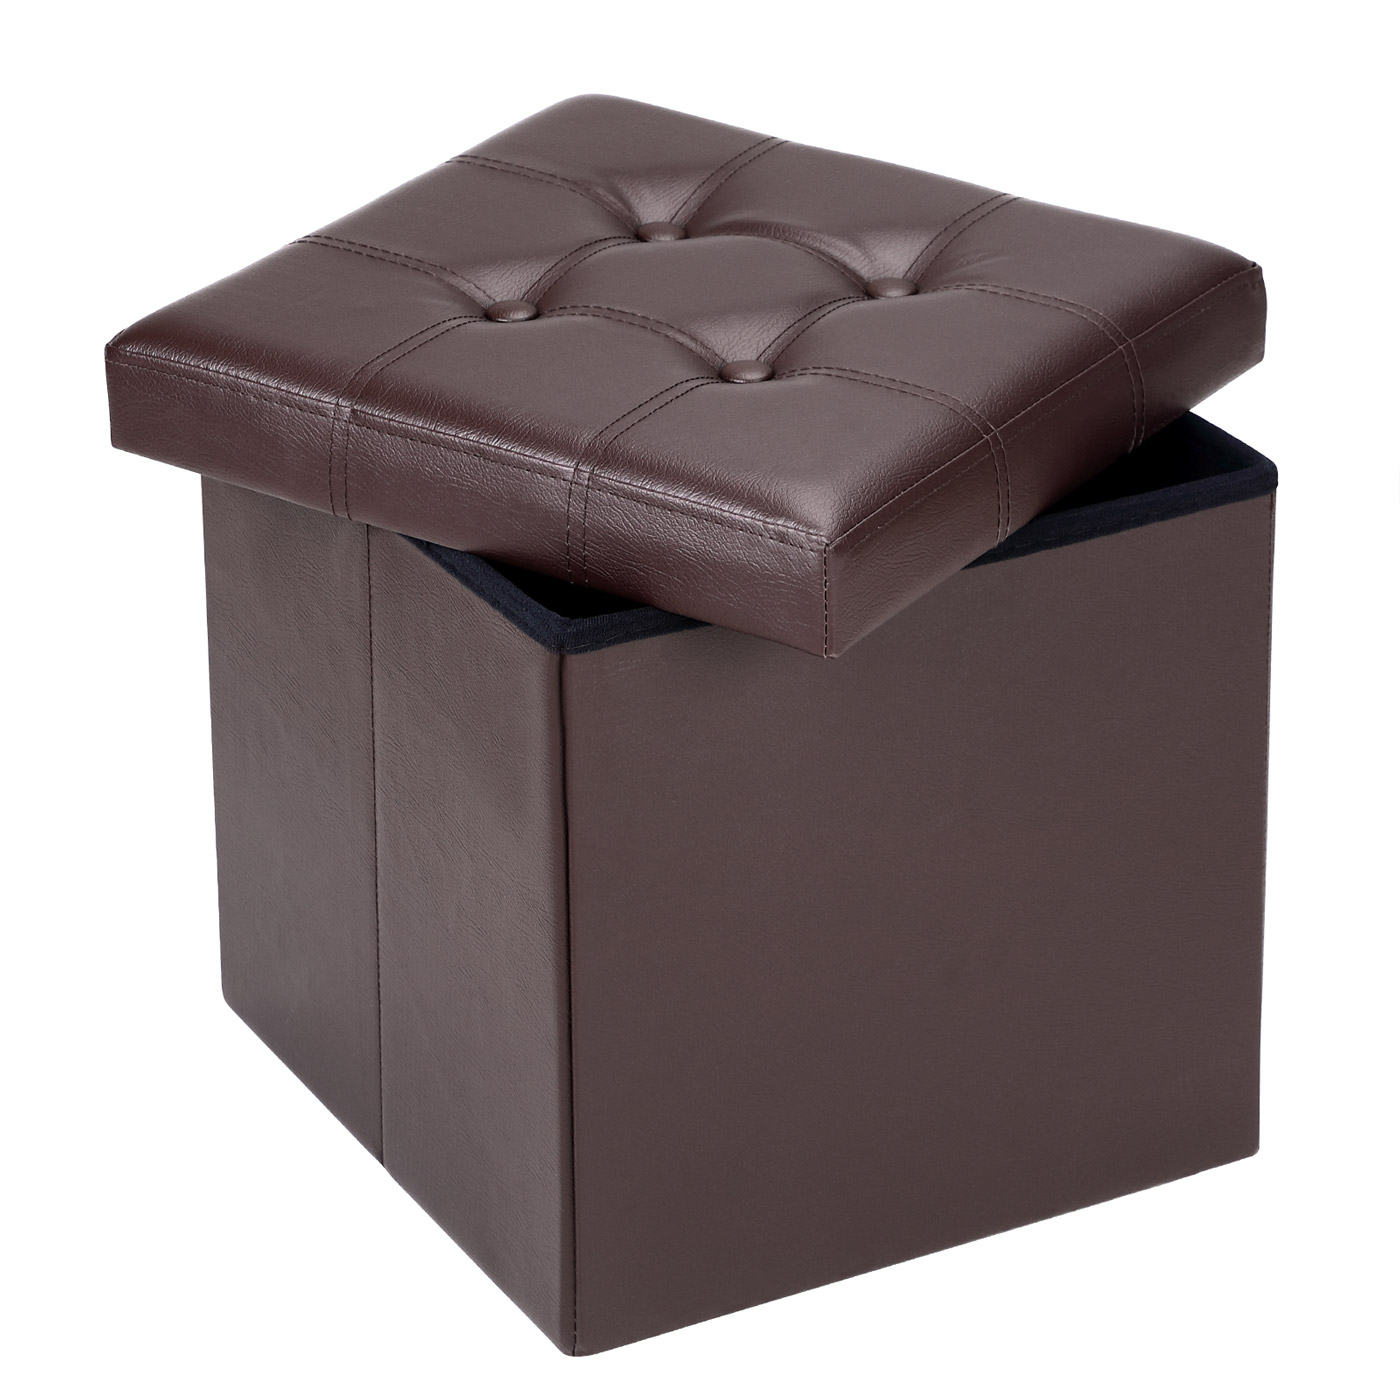 en.casa ® Faltbar Sitzhocker Sitzwürfel Aufbewahrungsbox Hocker Truhe Box Bank 